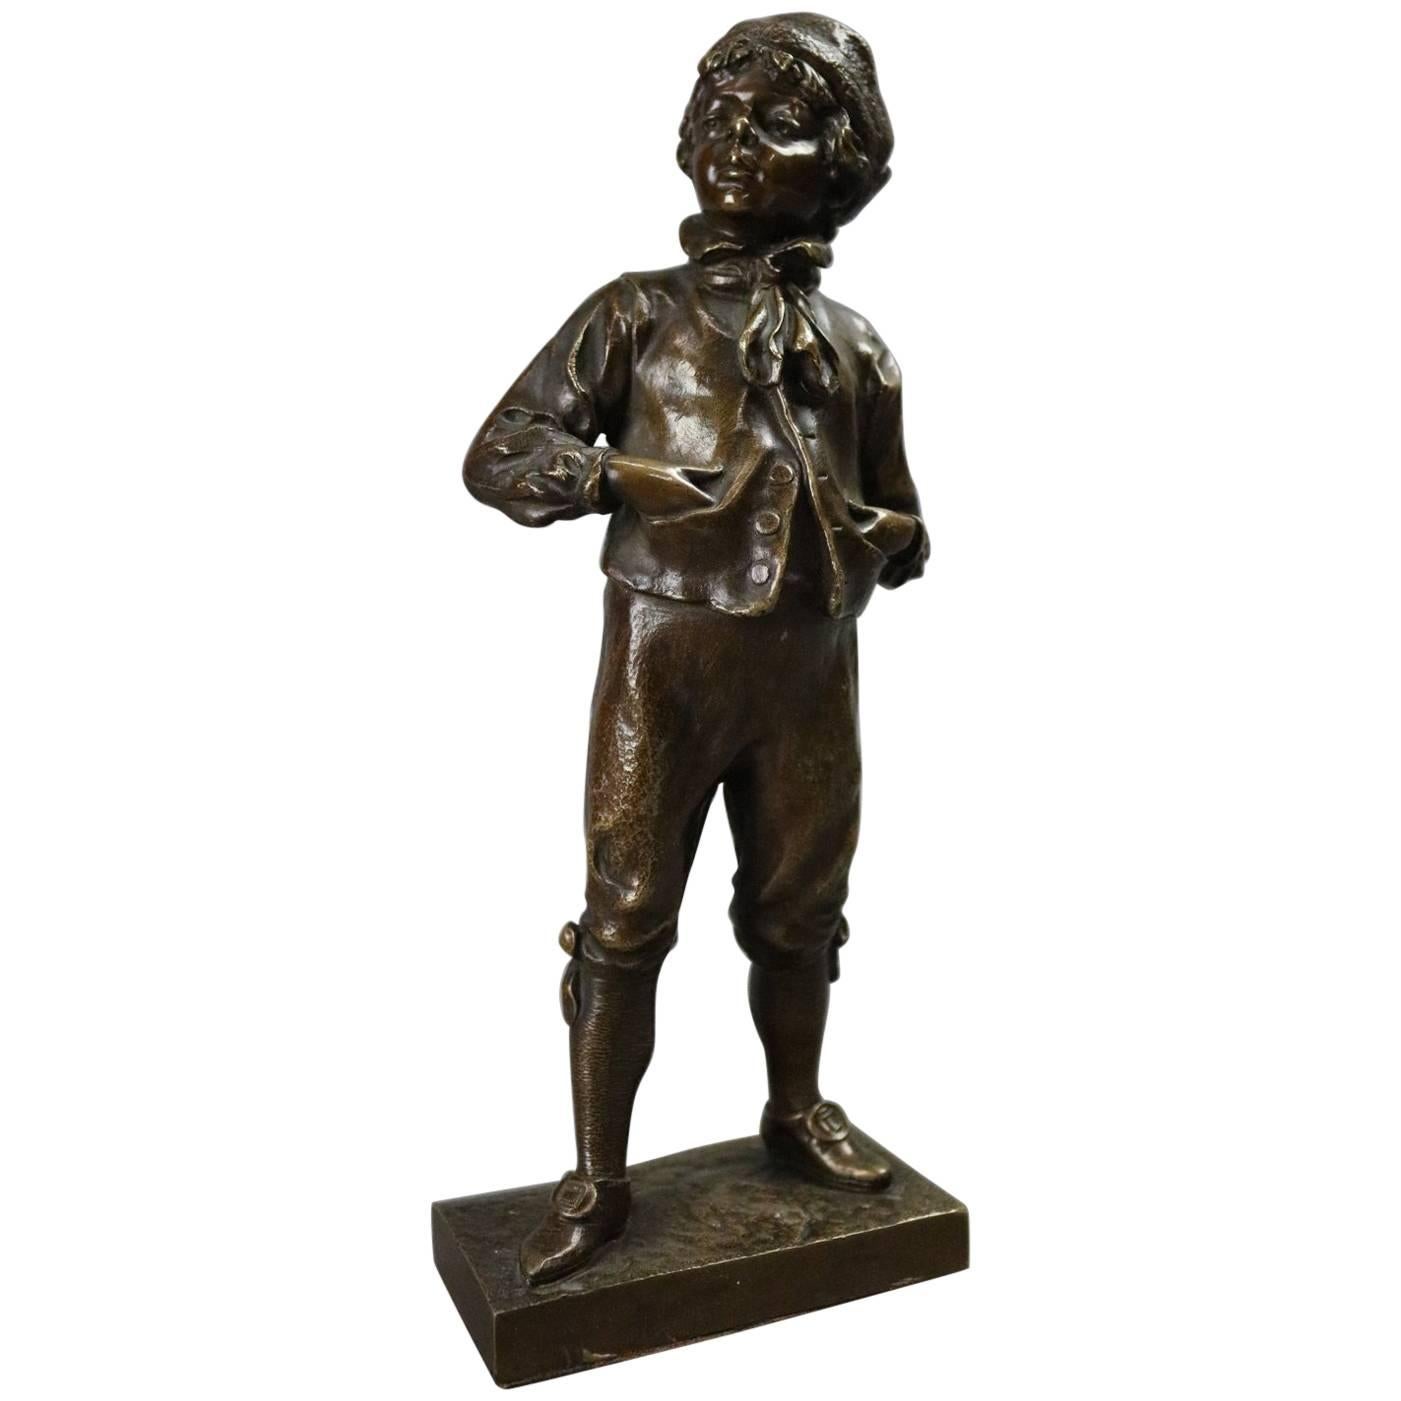 Antique German Figural Bronzed Metal Sculpture by M. Lindenberg of Boy, 1897